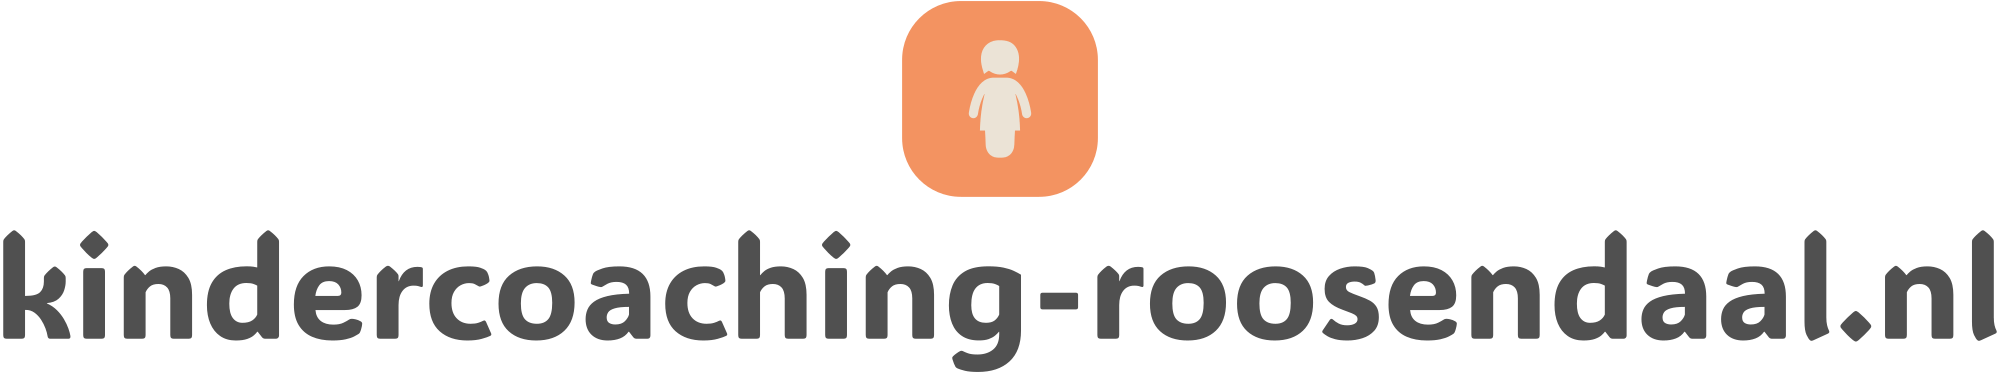 kindercoaching-roosendaalnl-high-resolution-logo-transparent